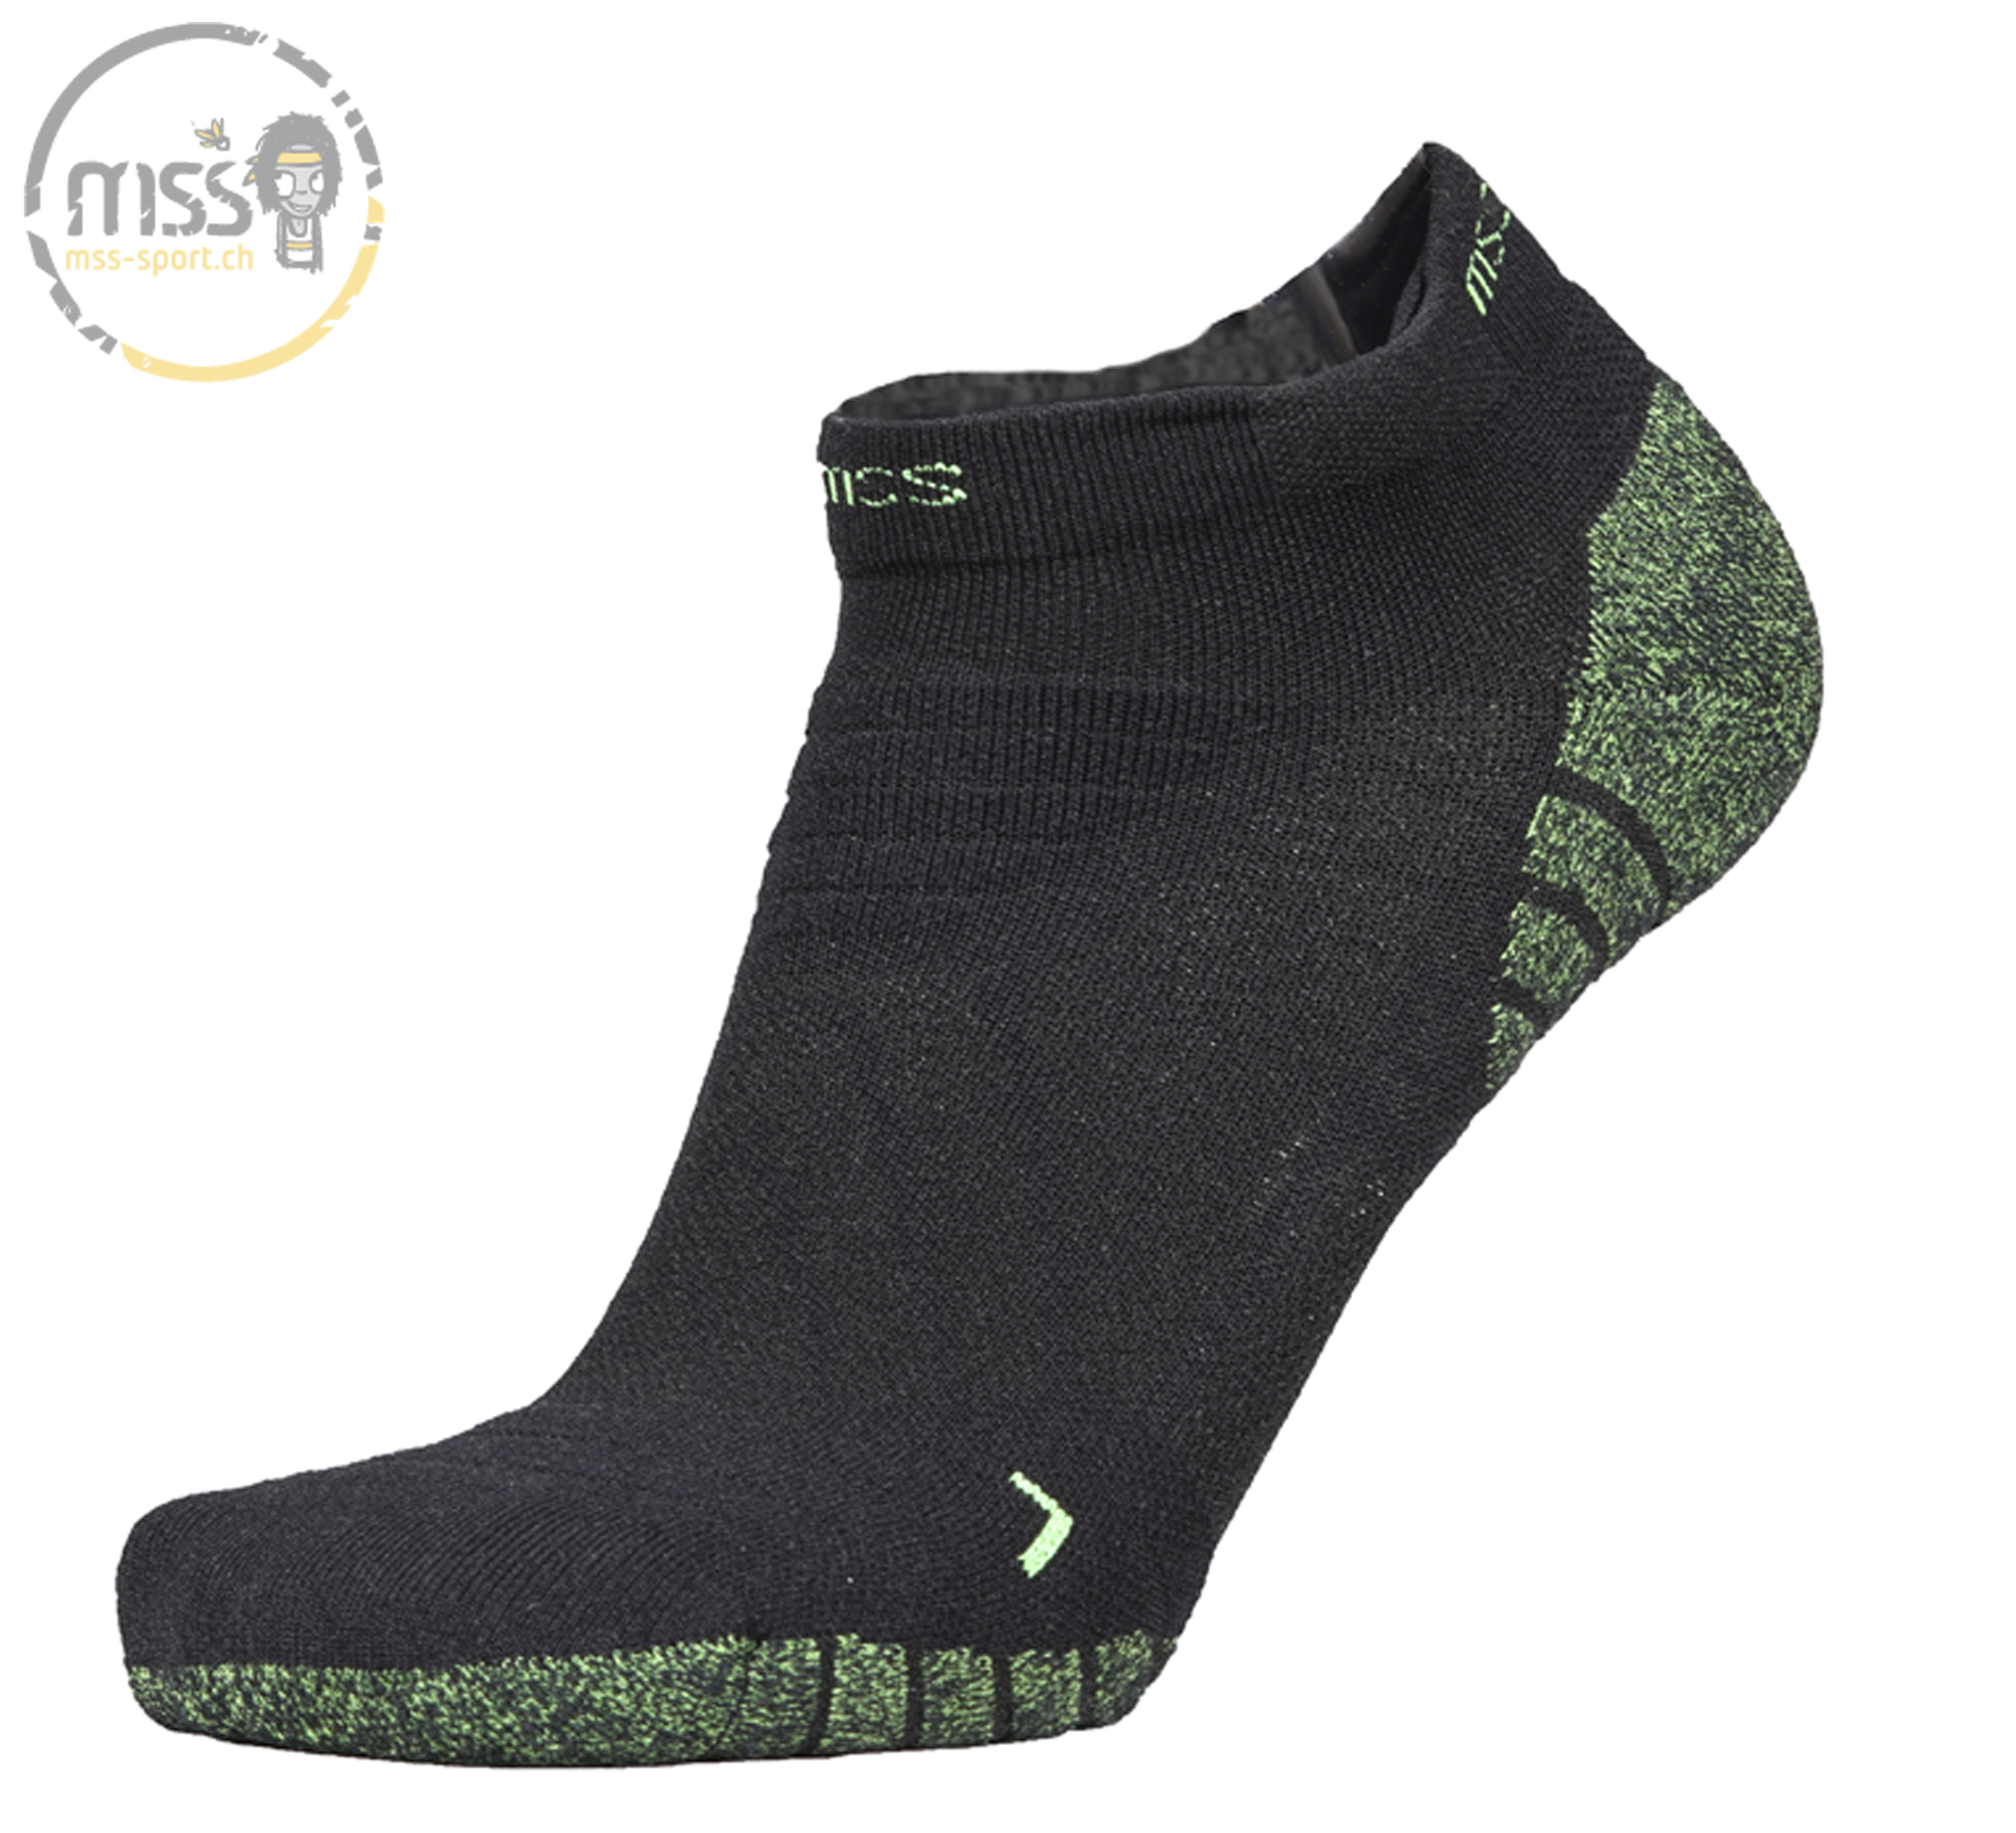 mss-socks GO 7300 low Men black green